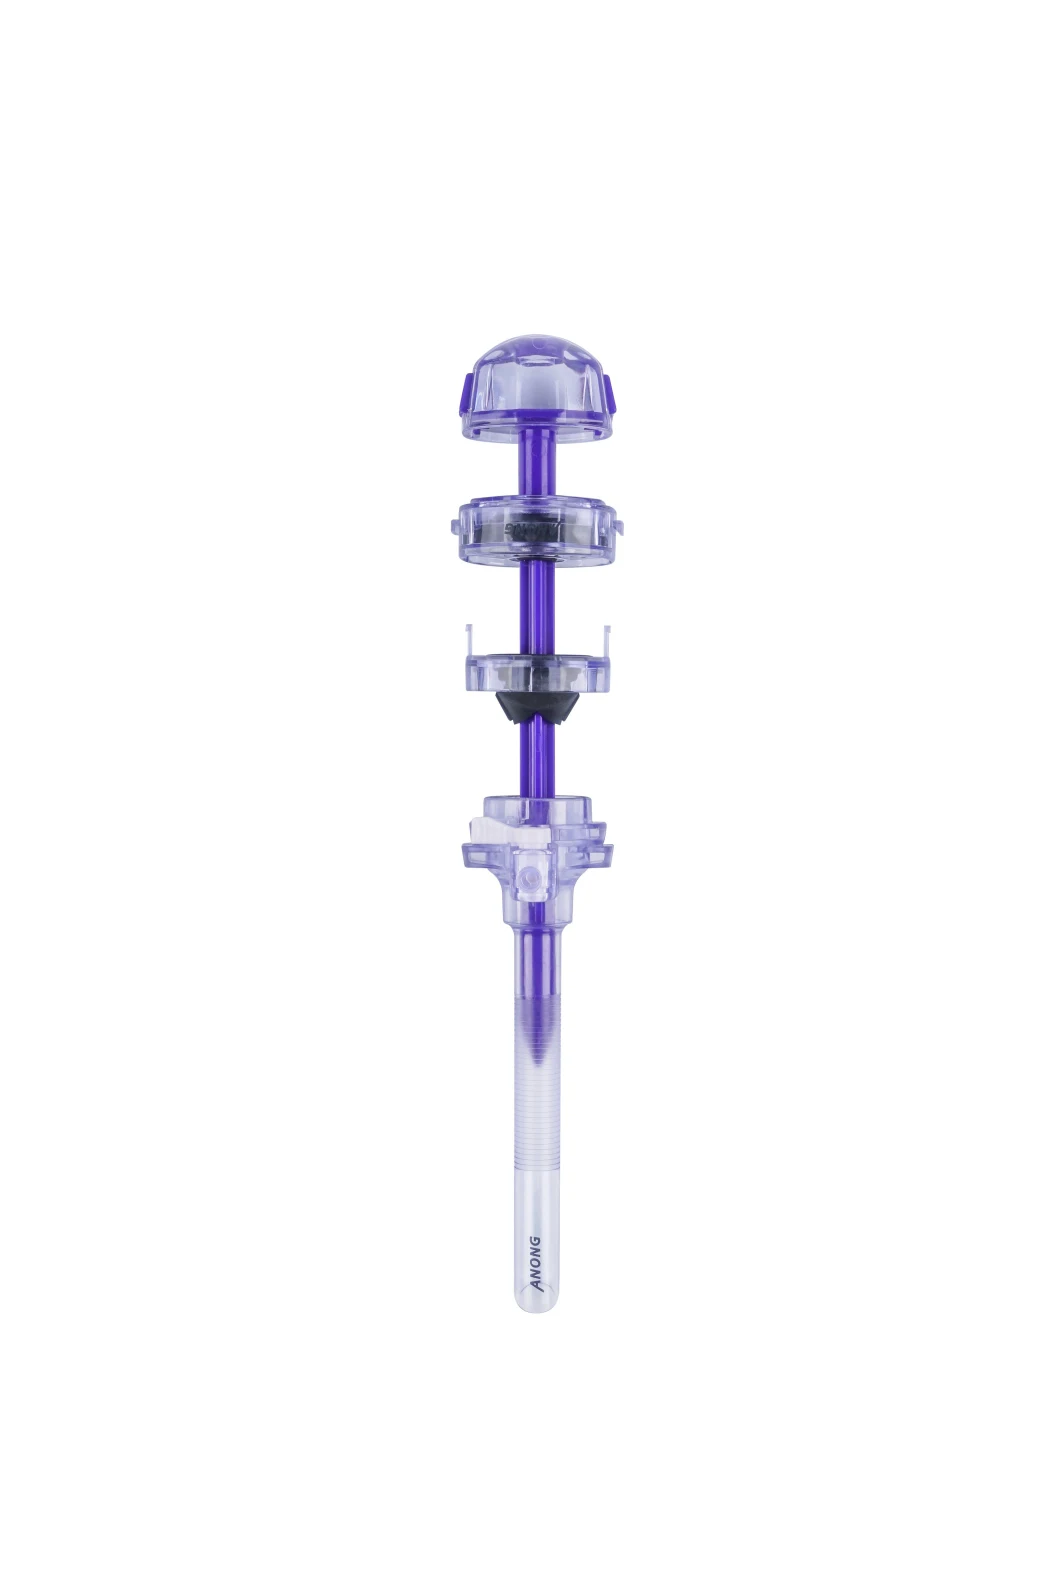 Surgical Laparpscopic Instruments Disposable Atraumatic Trocar /Single Use Trocar